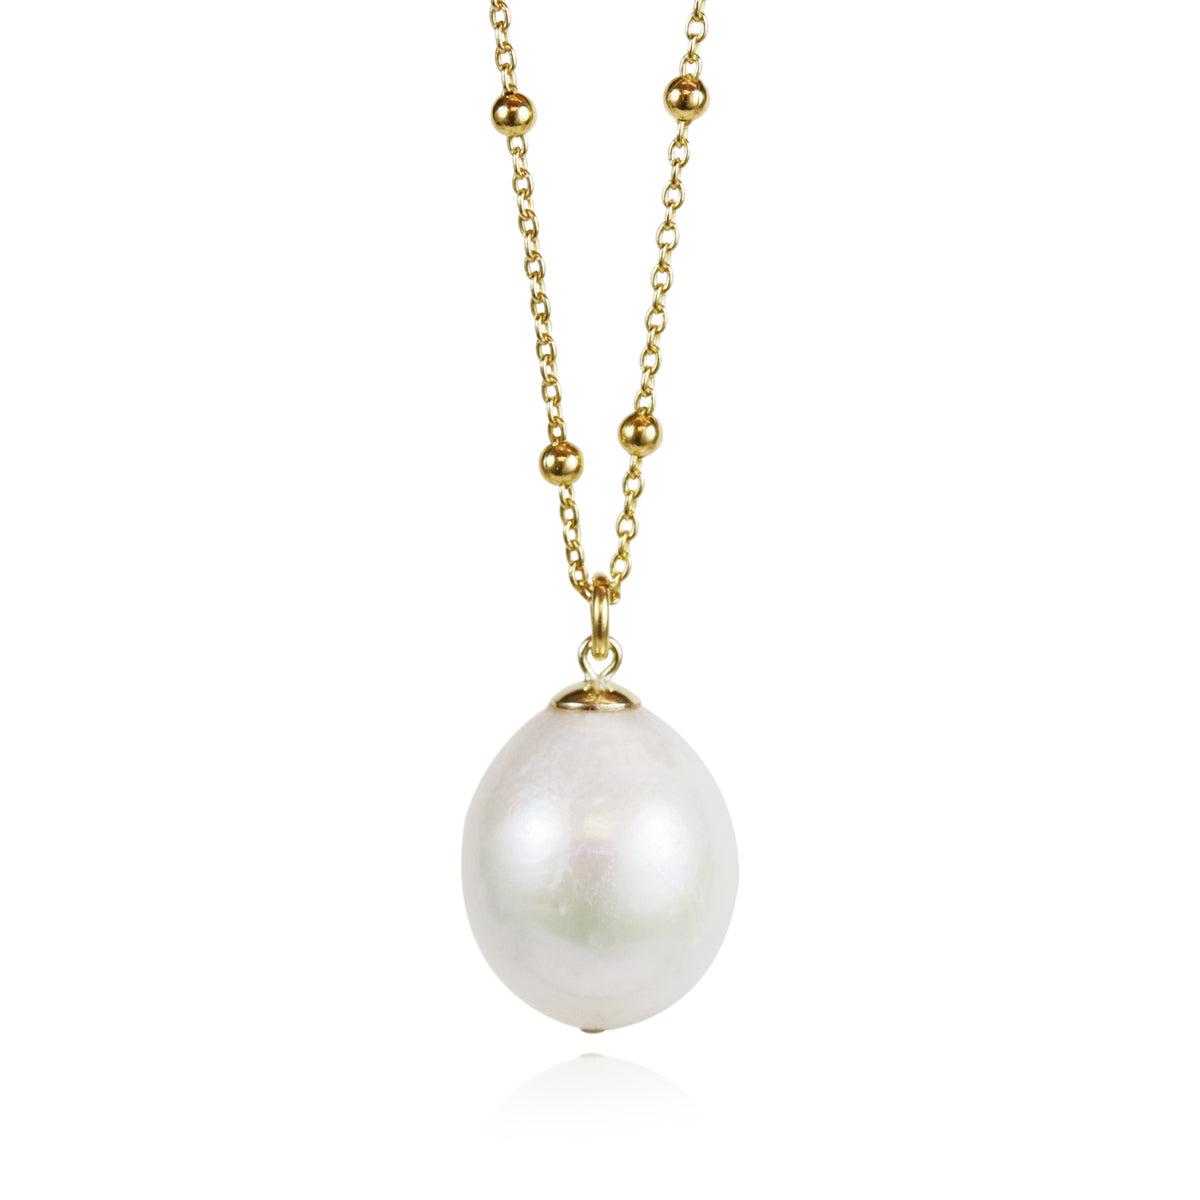 White Baroque Pearl Pendant with Satellite Chain